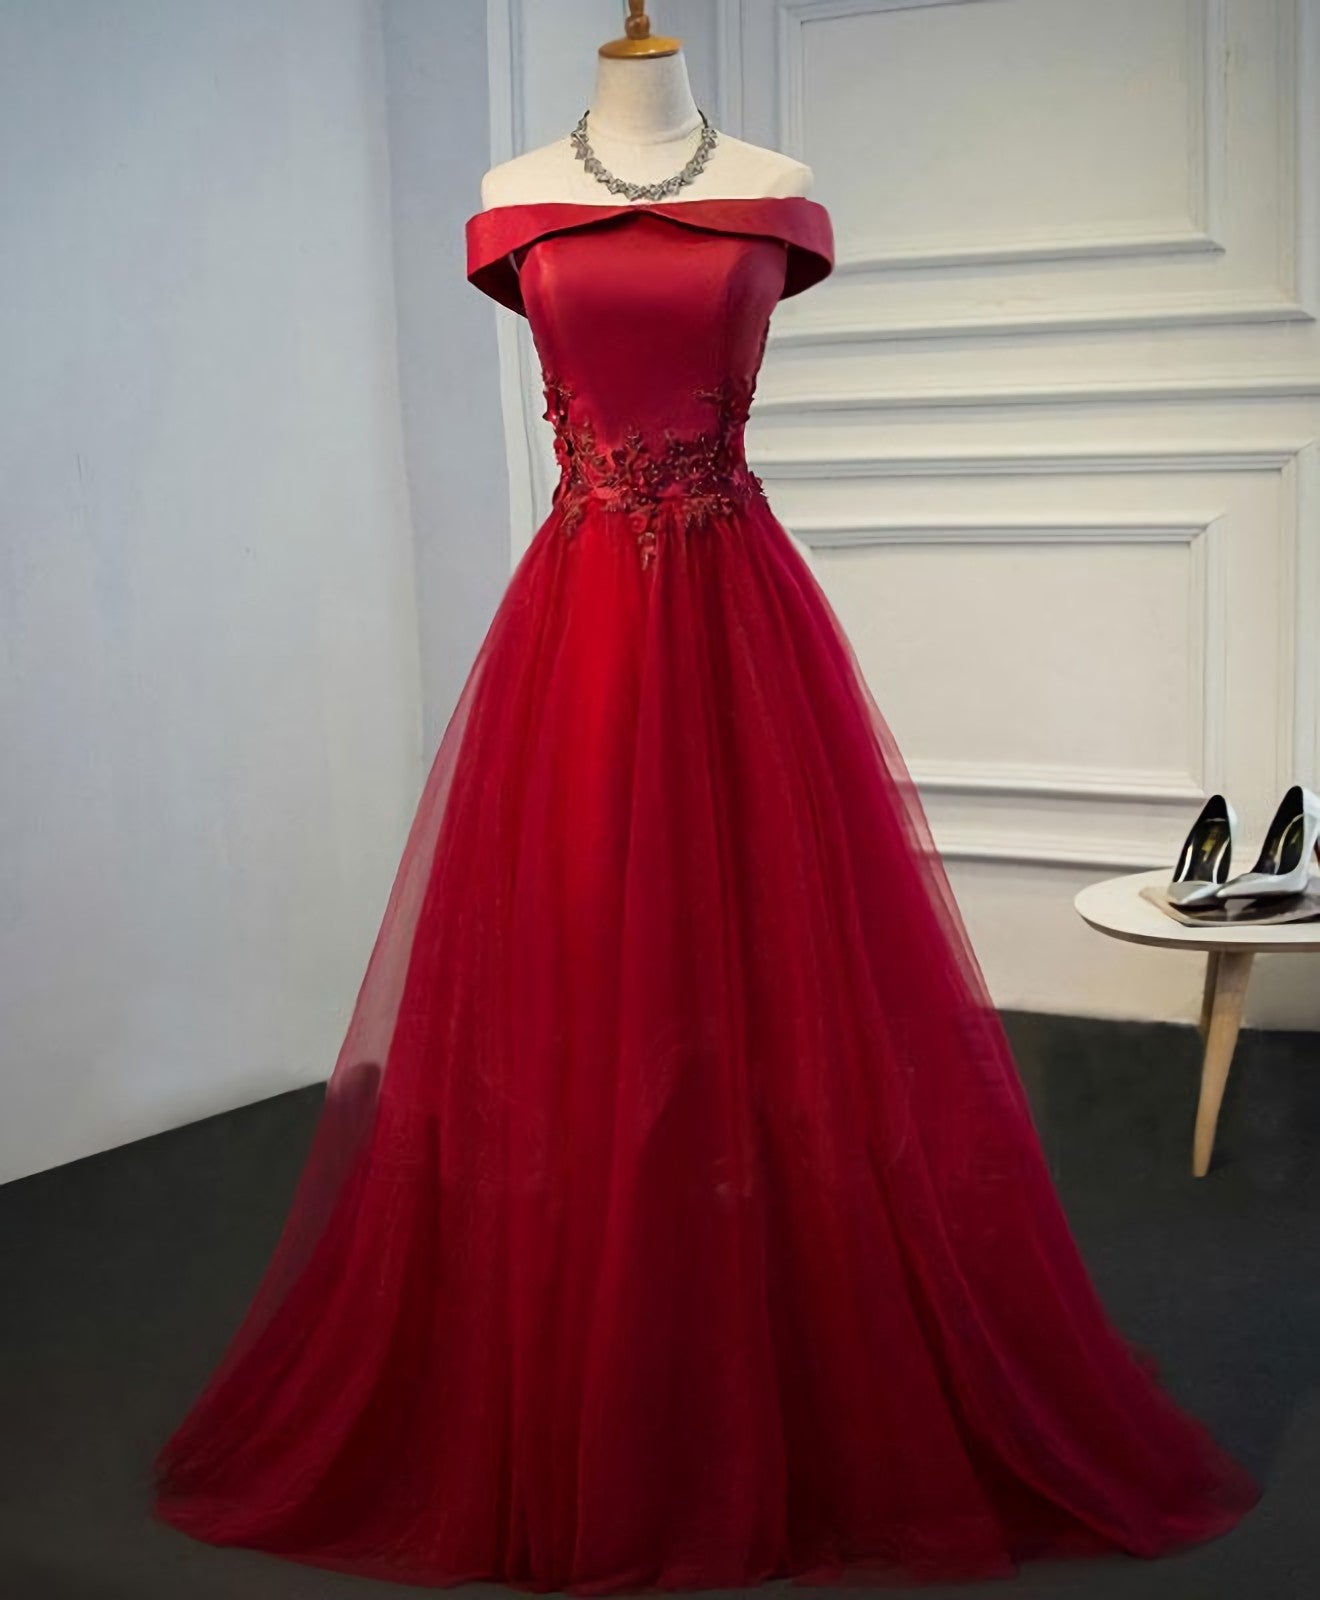 Prom Dress Types, Burgundy Lace Tulle Long Prom Dress, Off Shoulder Evening Dress